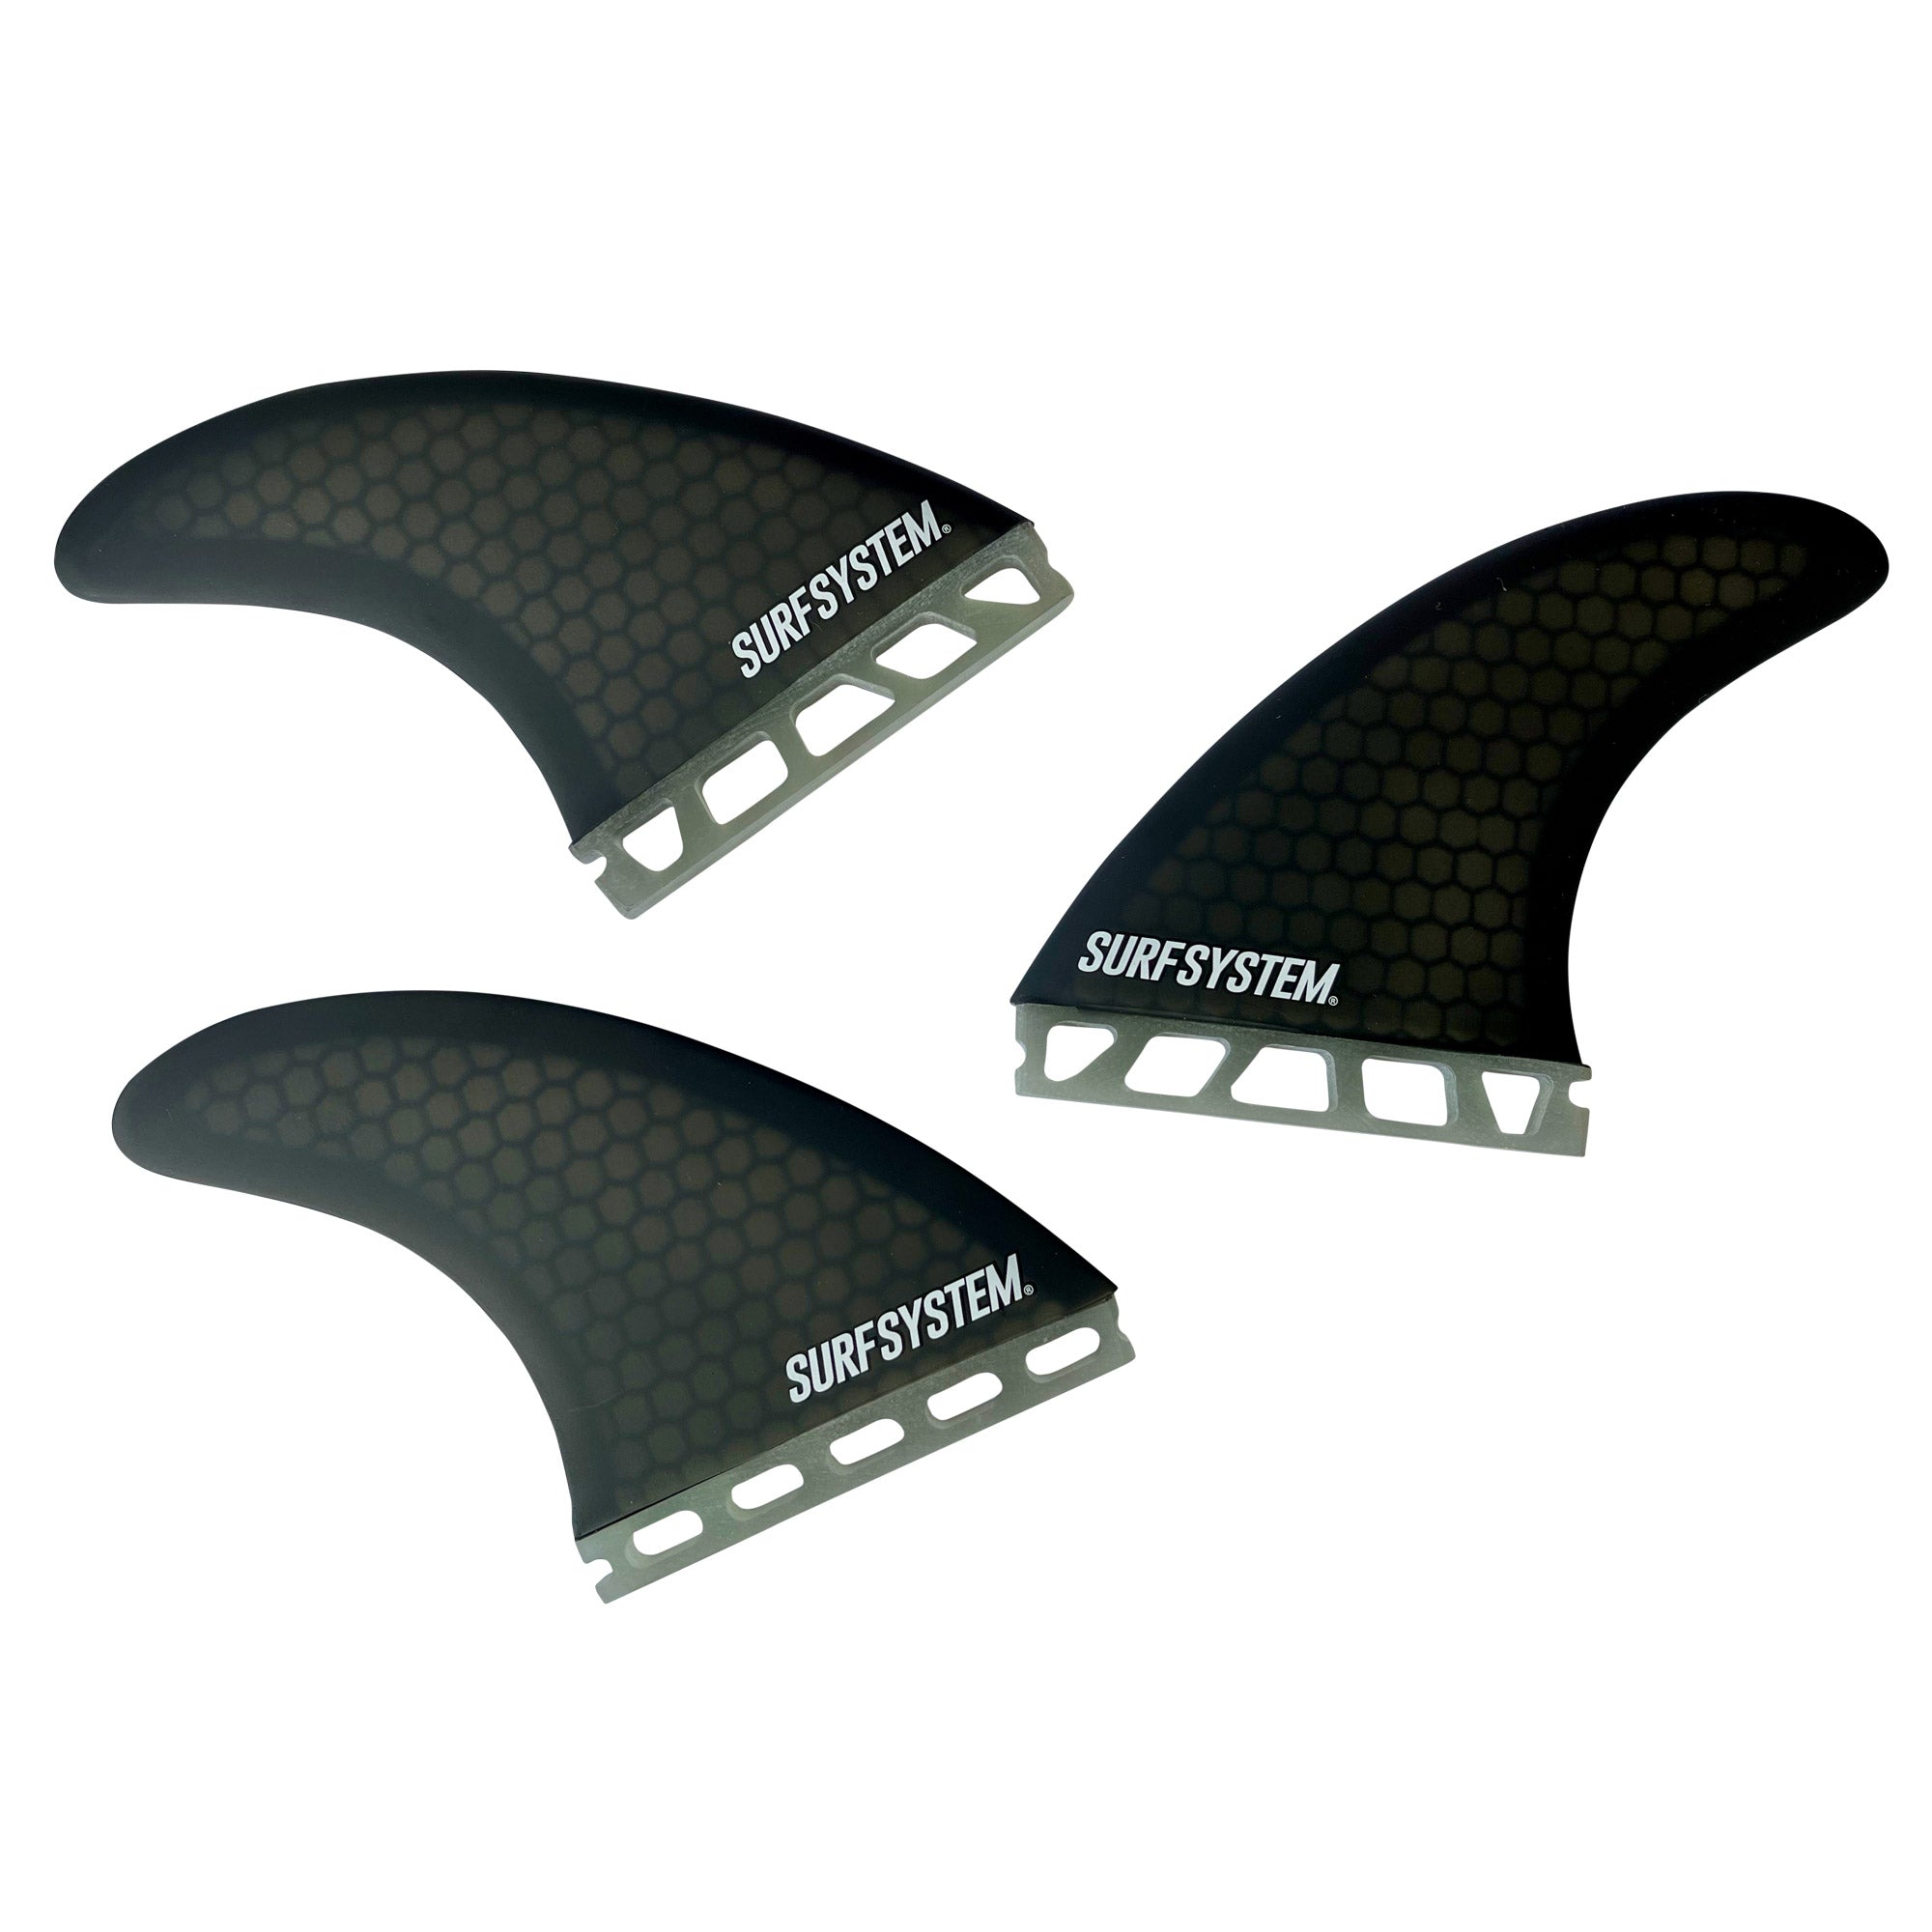 SURF SYSTEM - 3 quillas Honeycomb de fibra de vidrio compatibles con Futures - Talla M - Smoke